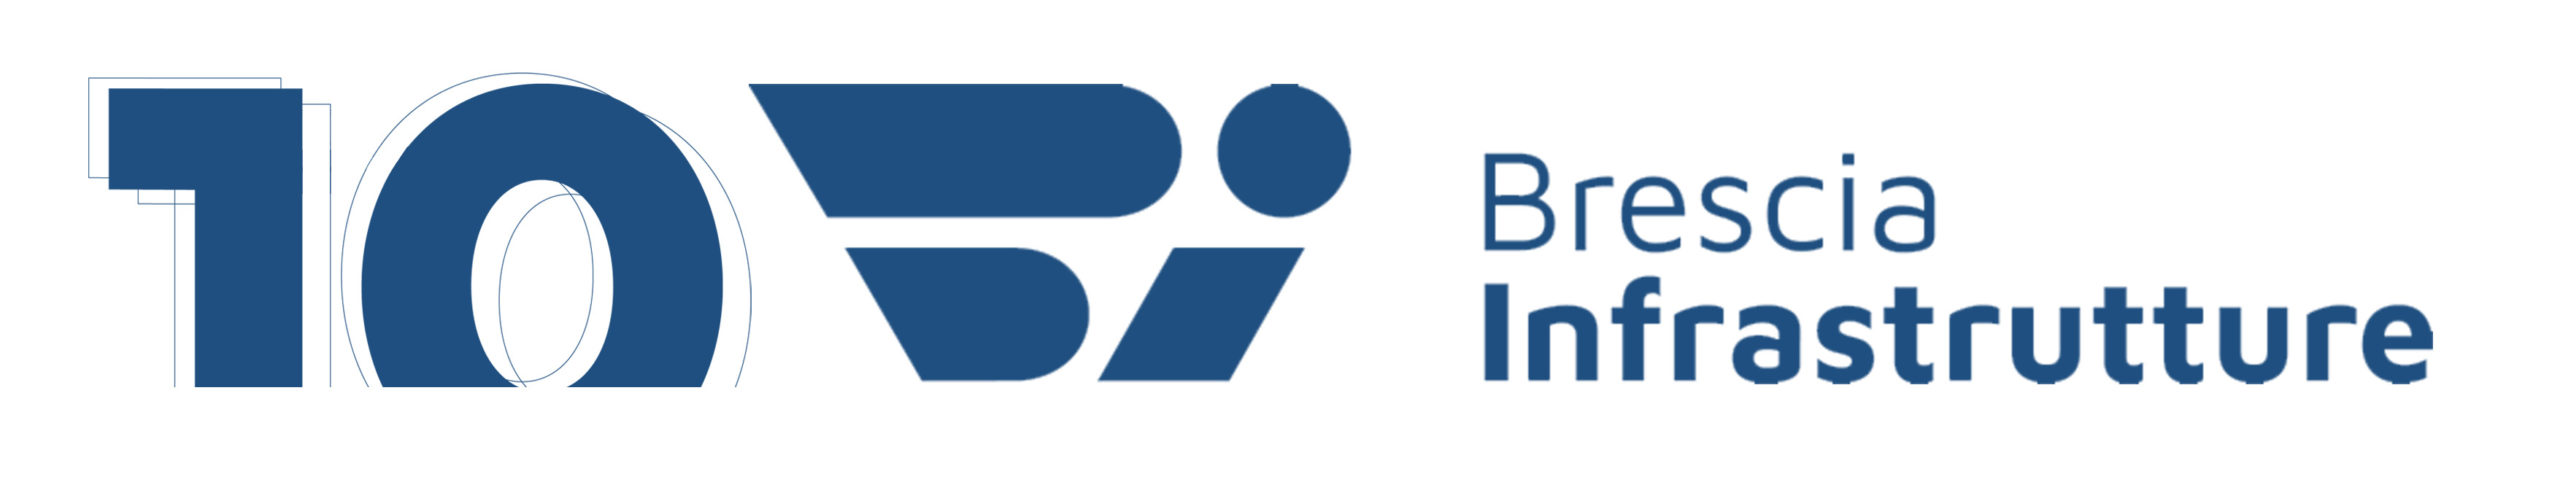 logo Brescia infrastrutture